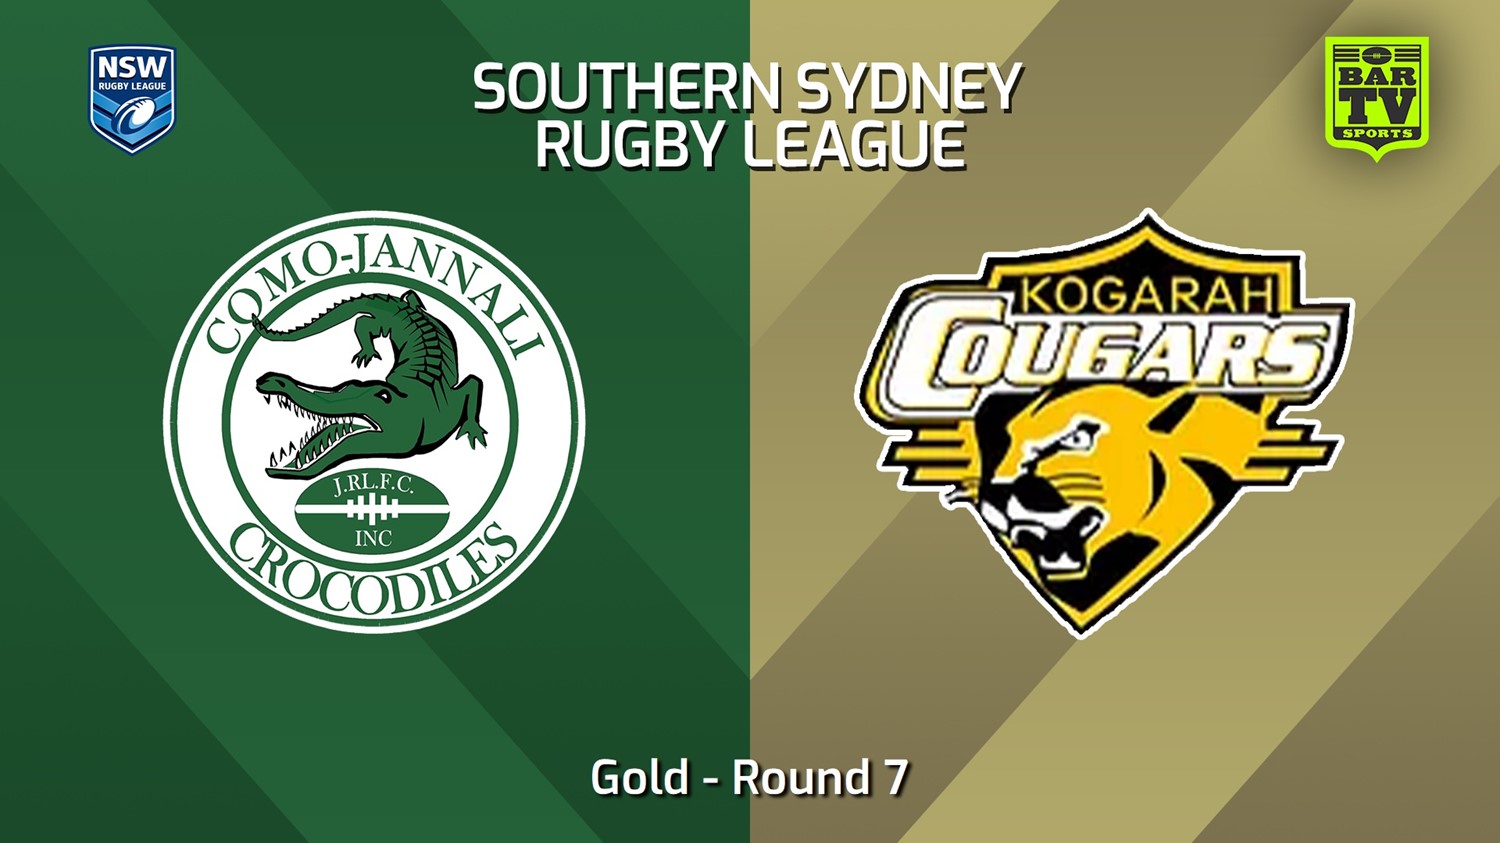 240525-video-S. Sydney Open Round 7 - Gold - Como Jannali Crocodiles v Kogarah Cougars Slate Image